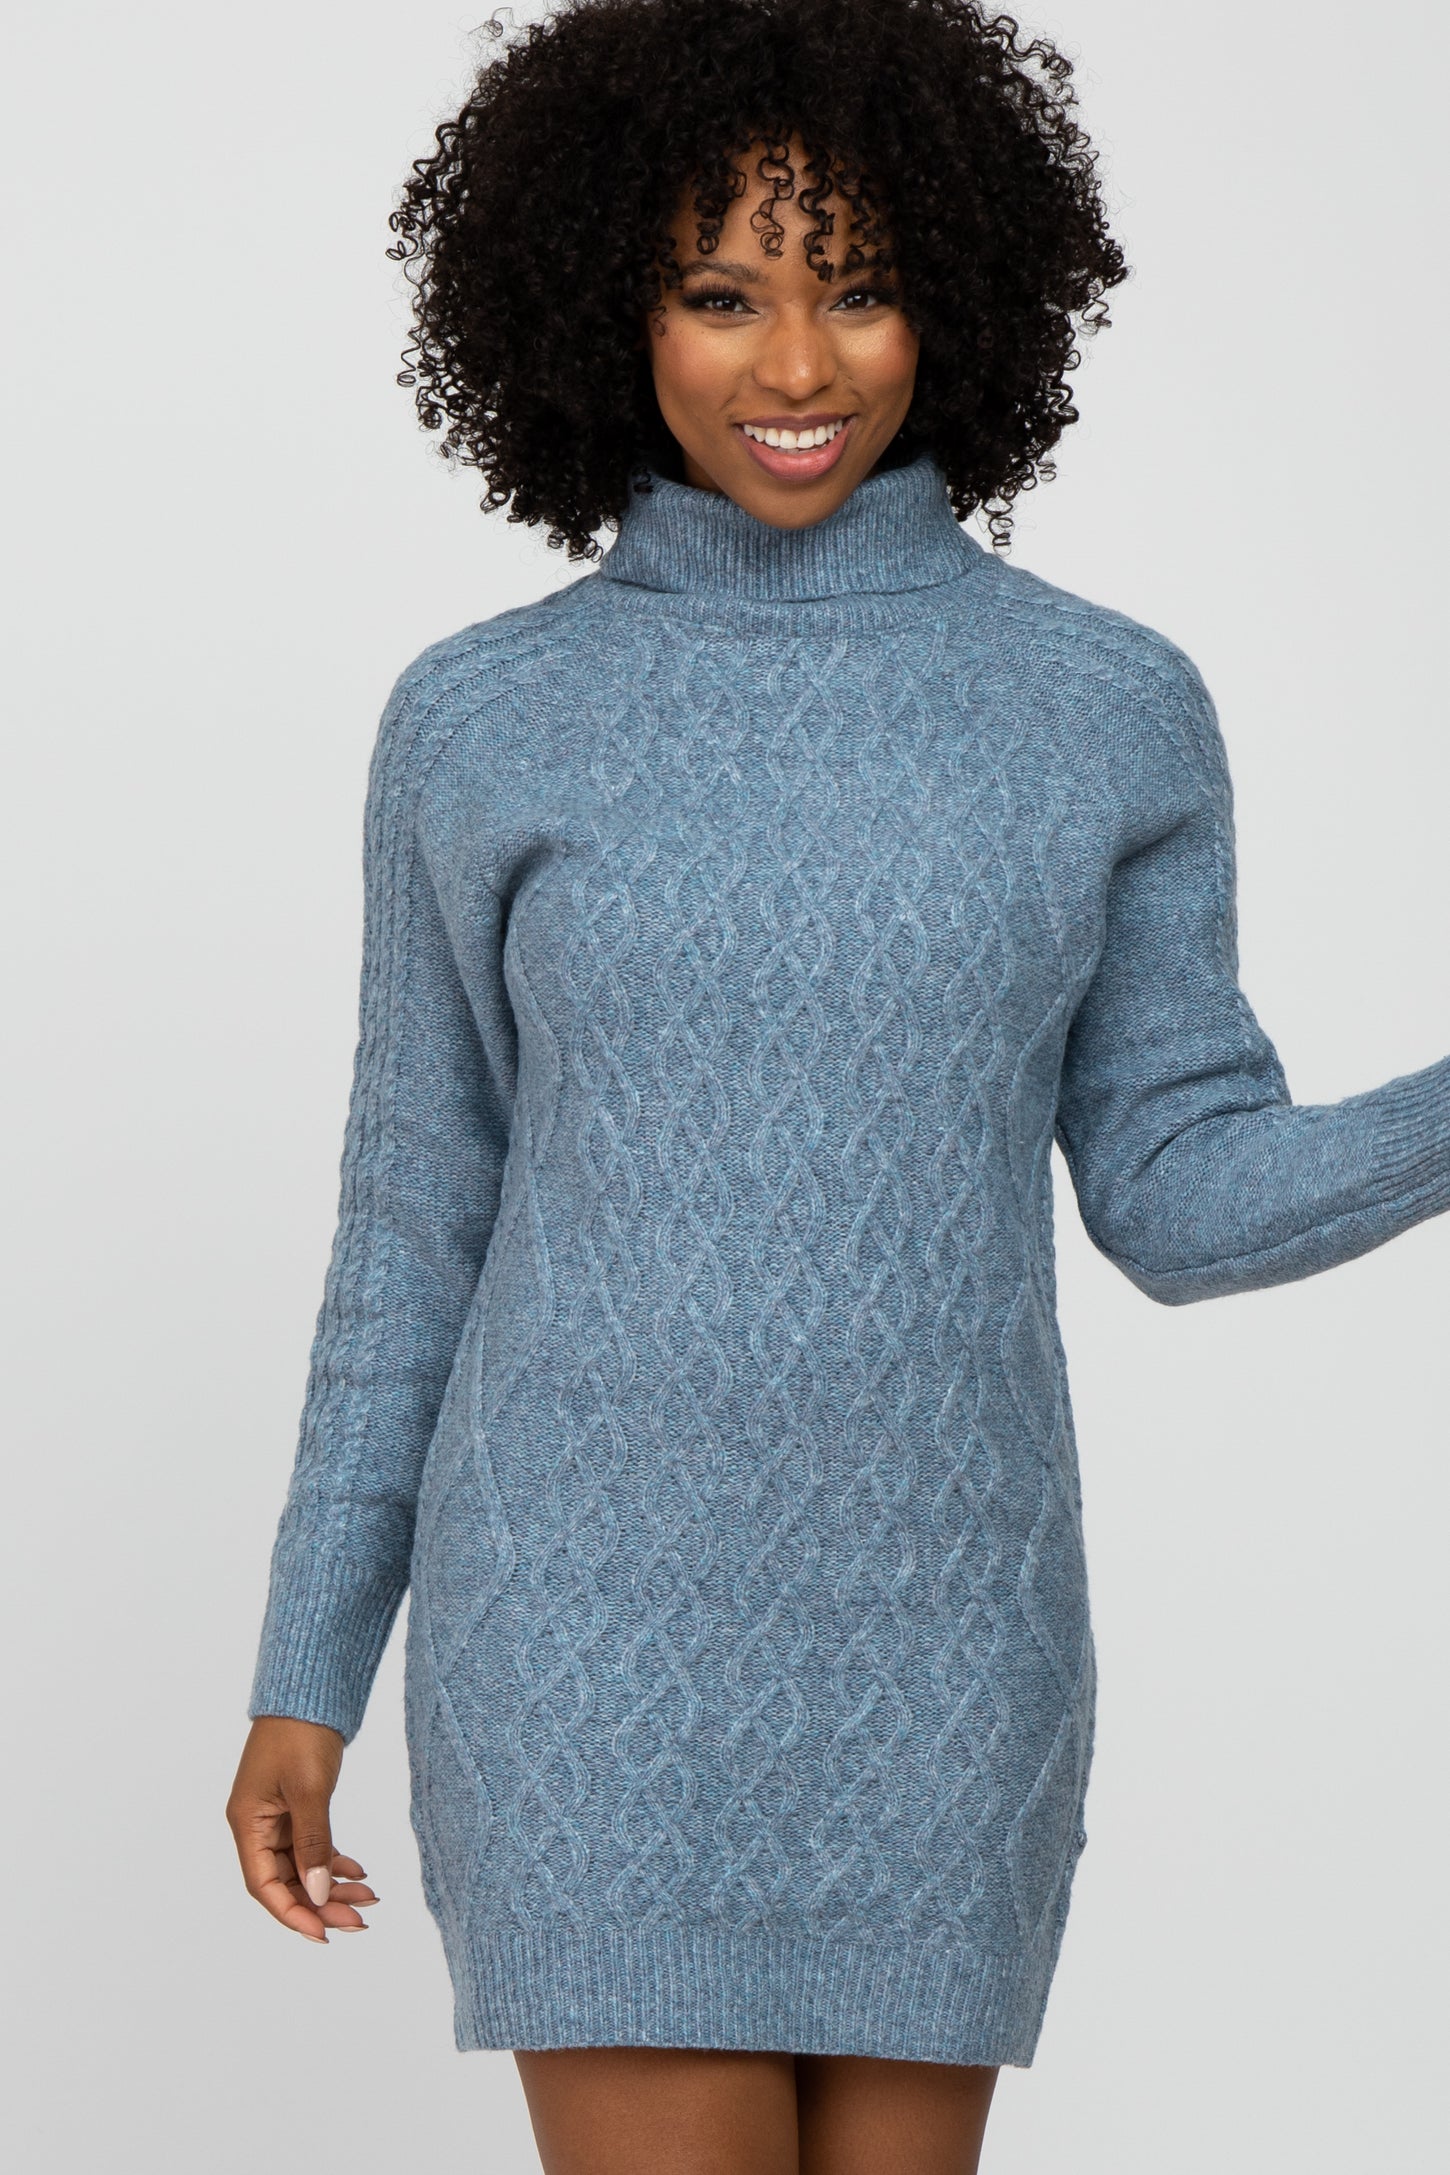 Blue Cable Knit Turtleneck Maternity Sweater Dress– PinkBlush